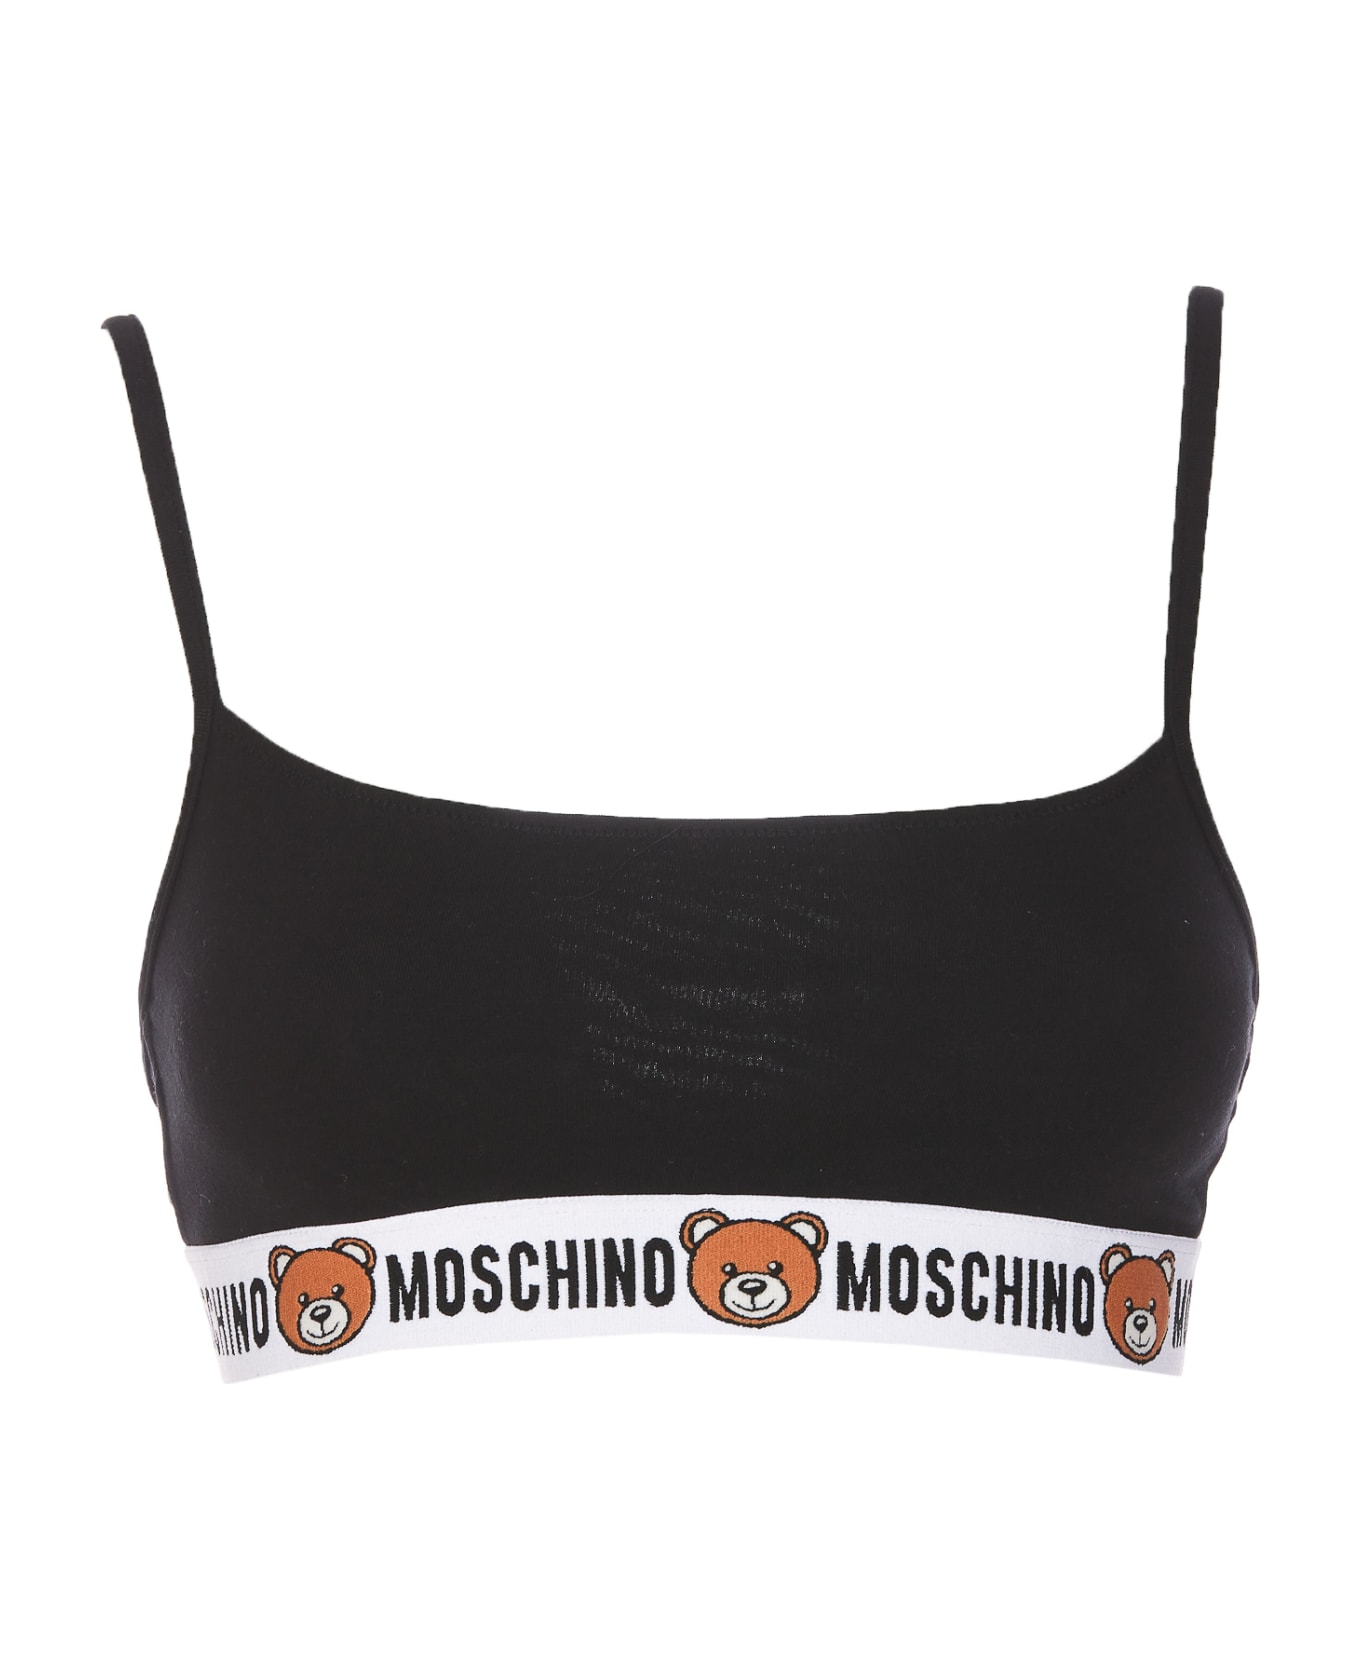 Moschino Logo Bra Top - Black